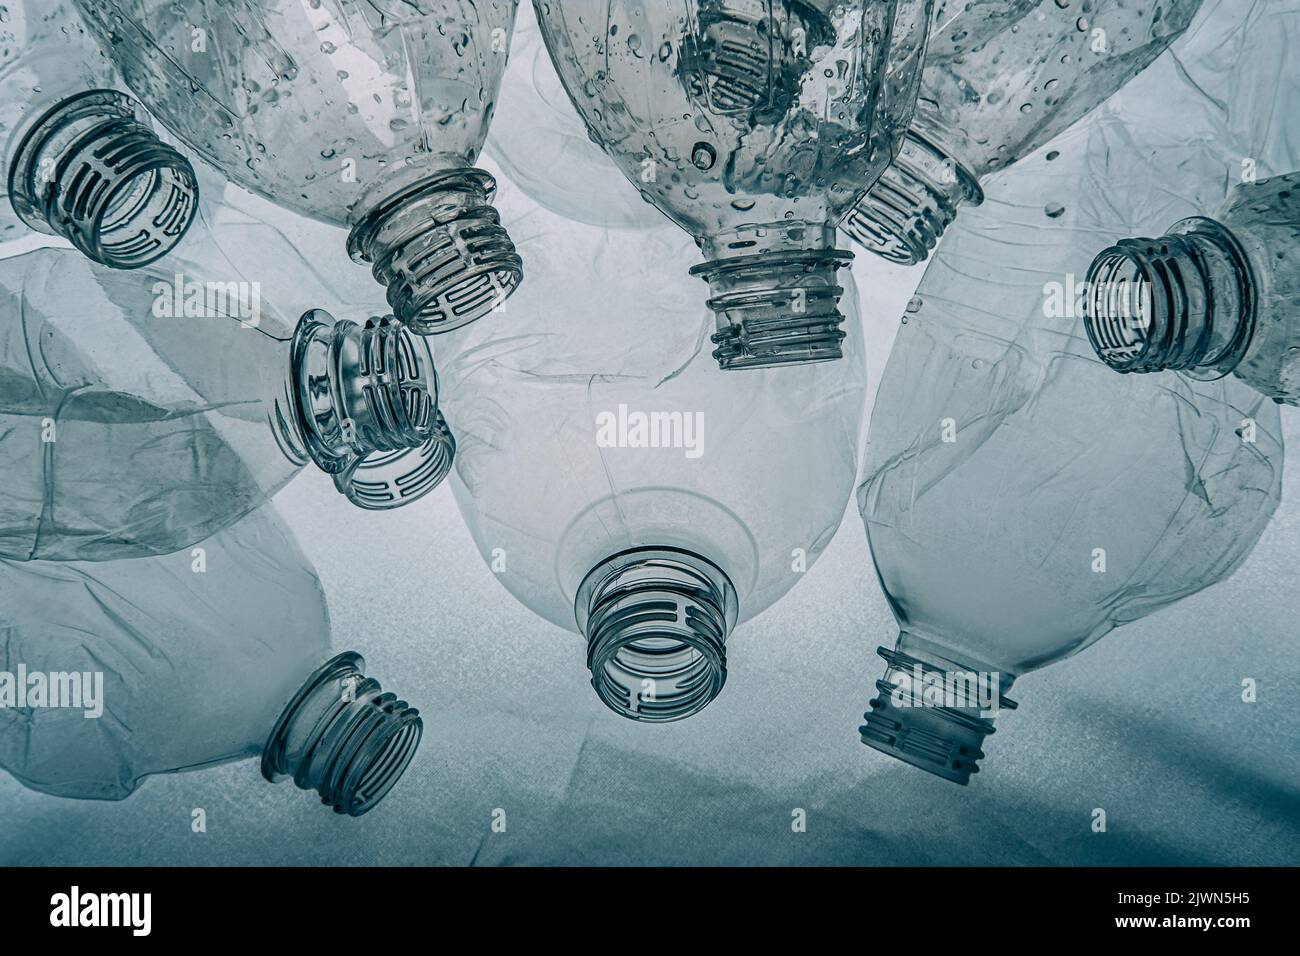 plastic reuse waste management wet clean bottles Stock Photo